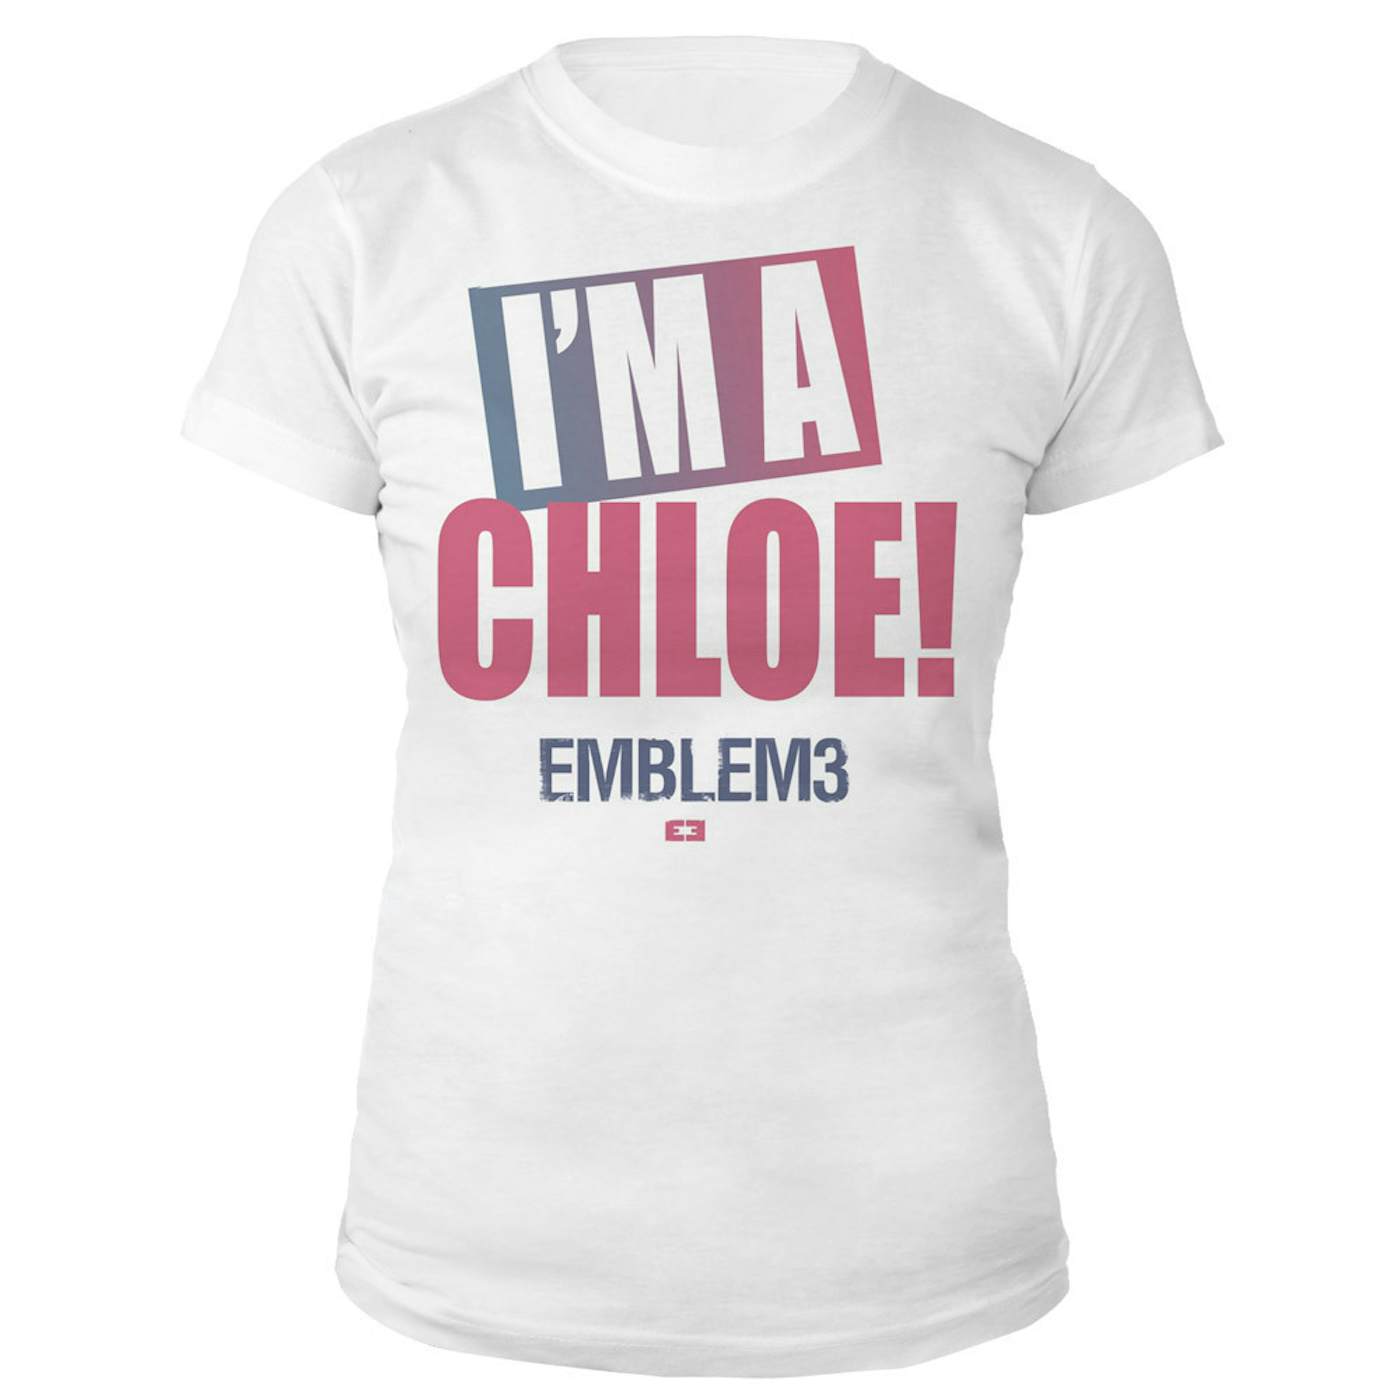 Emblem3 I'm A Chloe! Girl's Tee